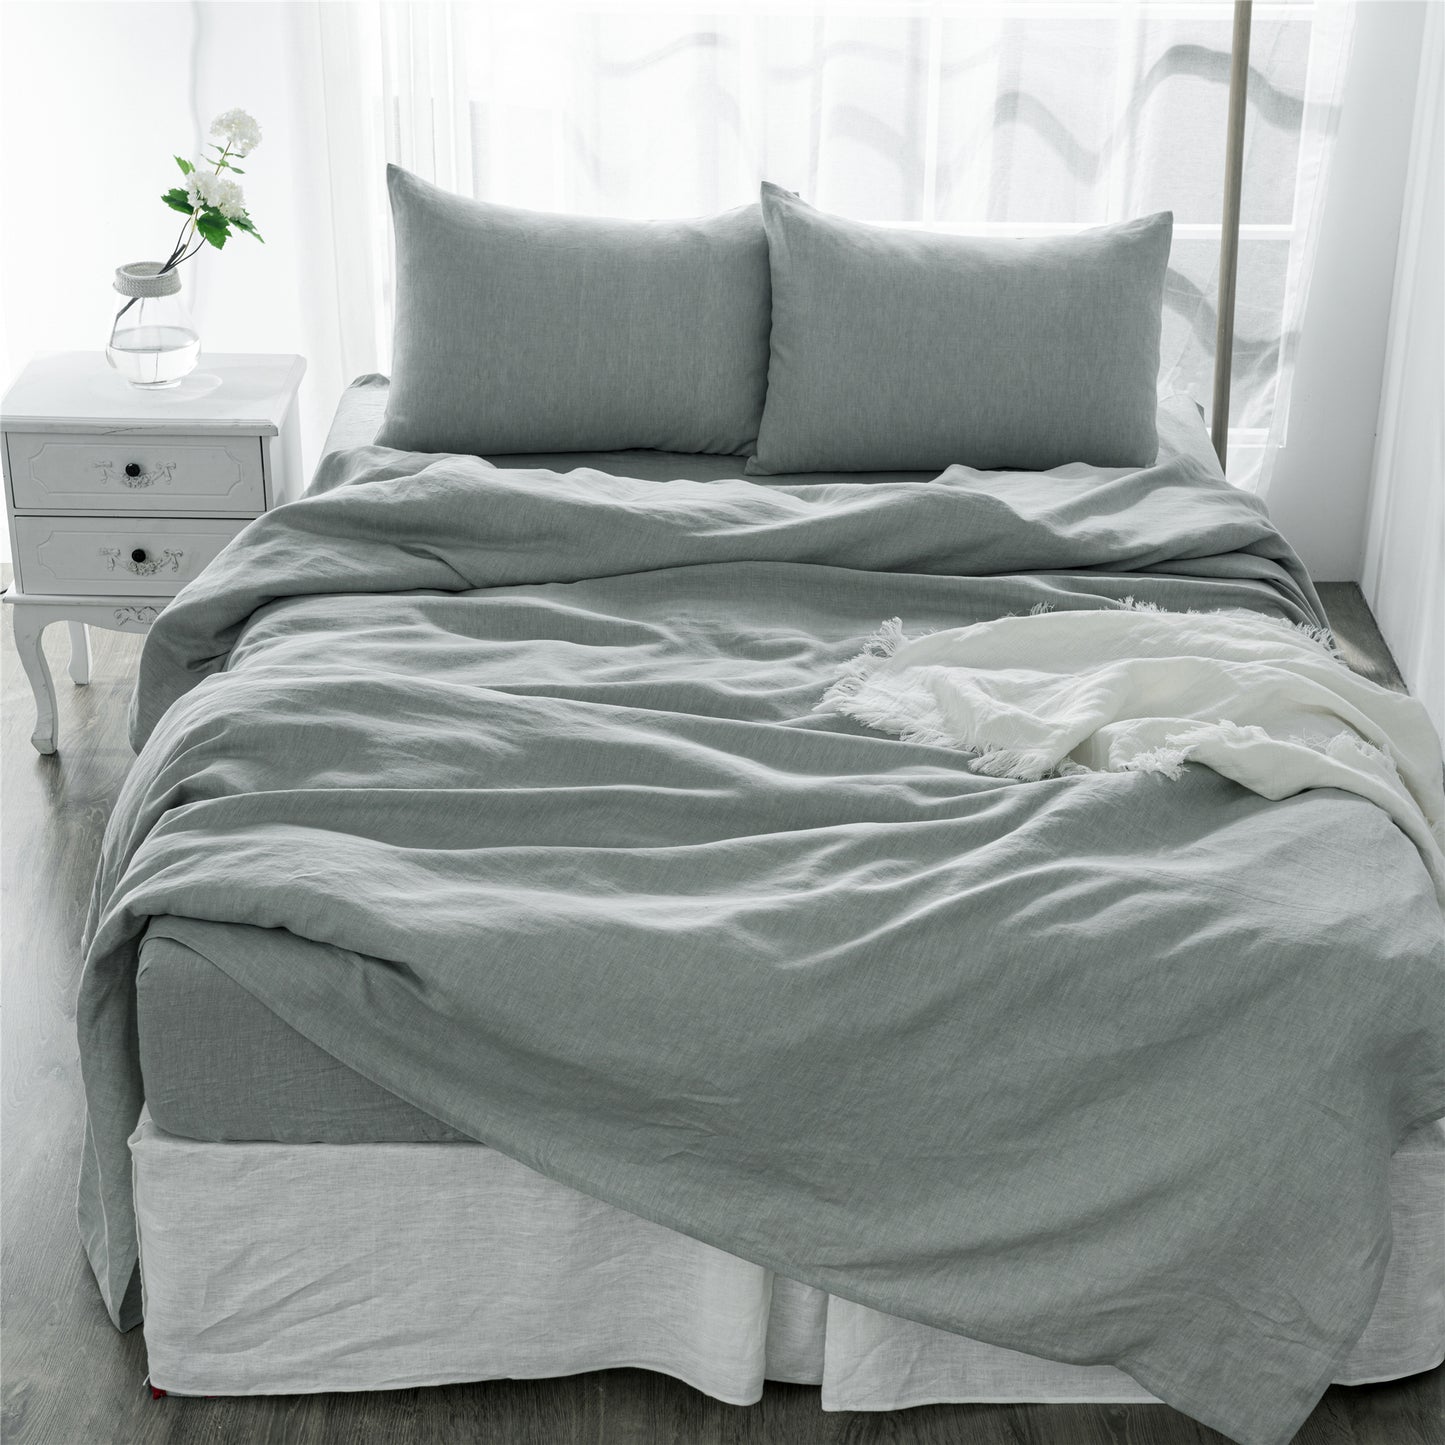 Basic Linen Sheets Set for bedroom decor in USA